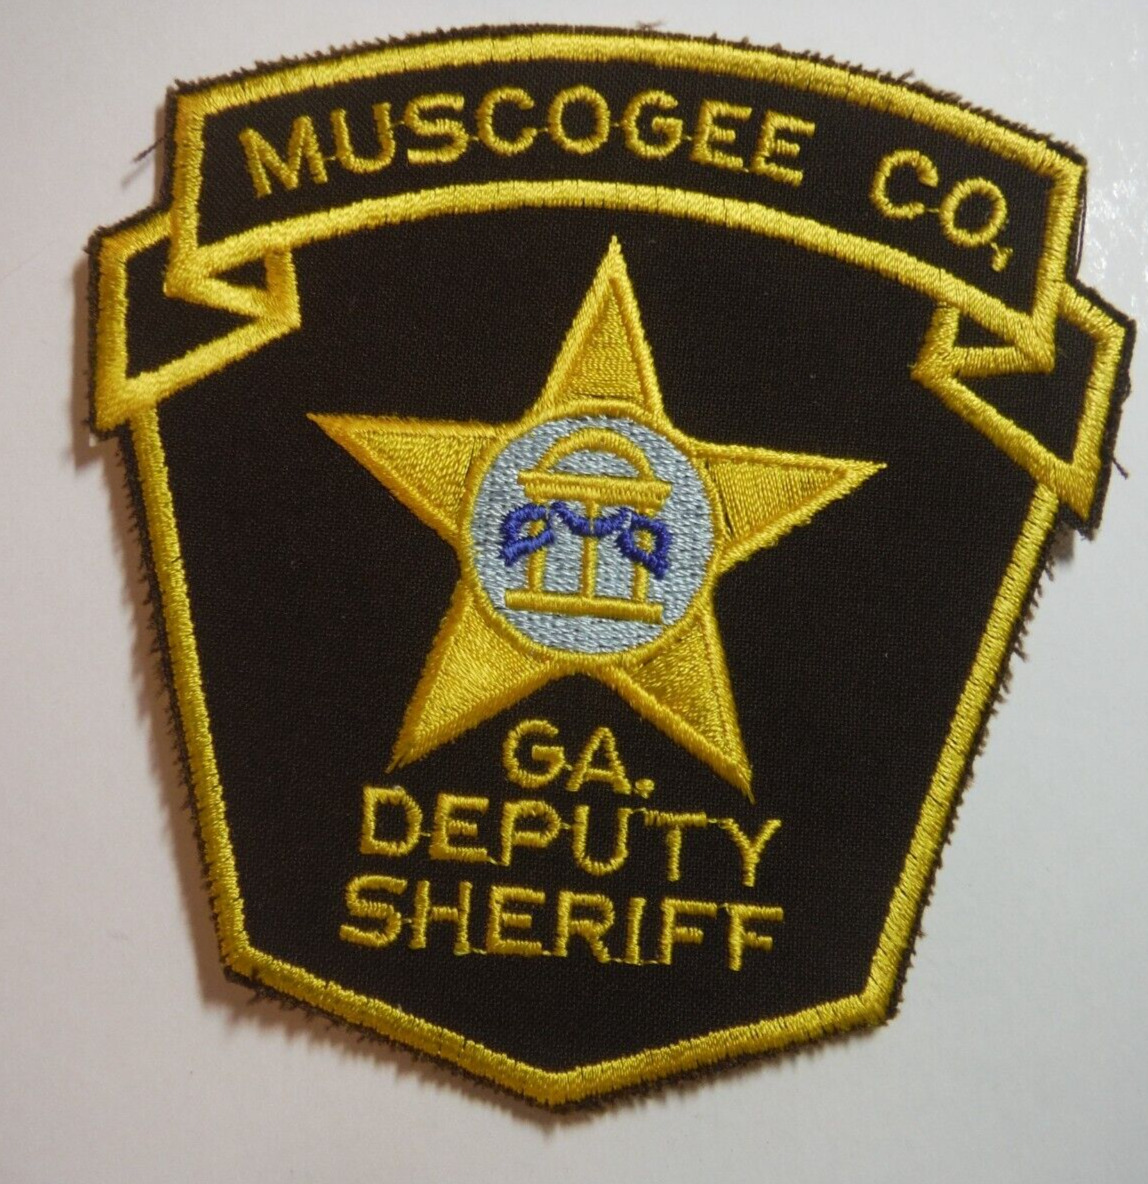 Muscogee County Sheriff's Dept Georgia patch